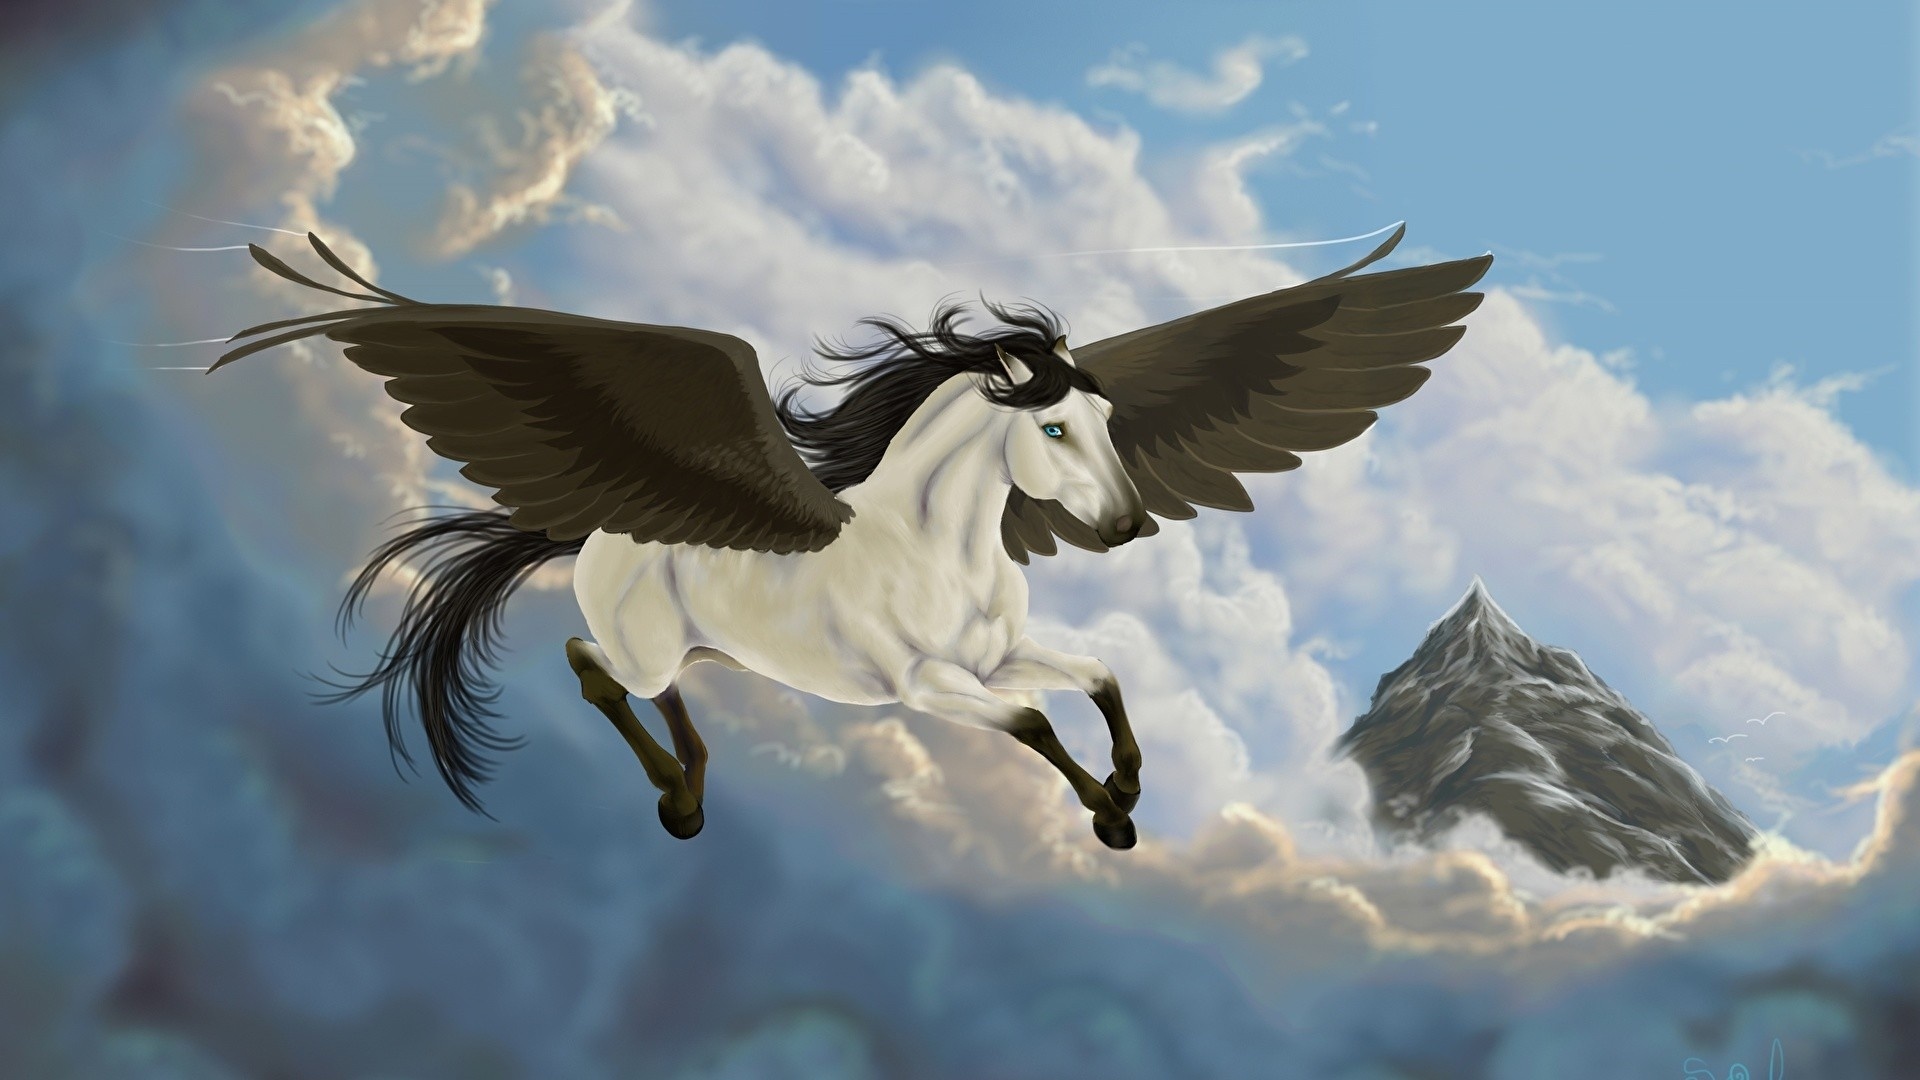 Pegasus Art wallpaper photo hd